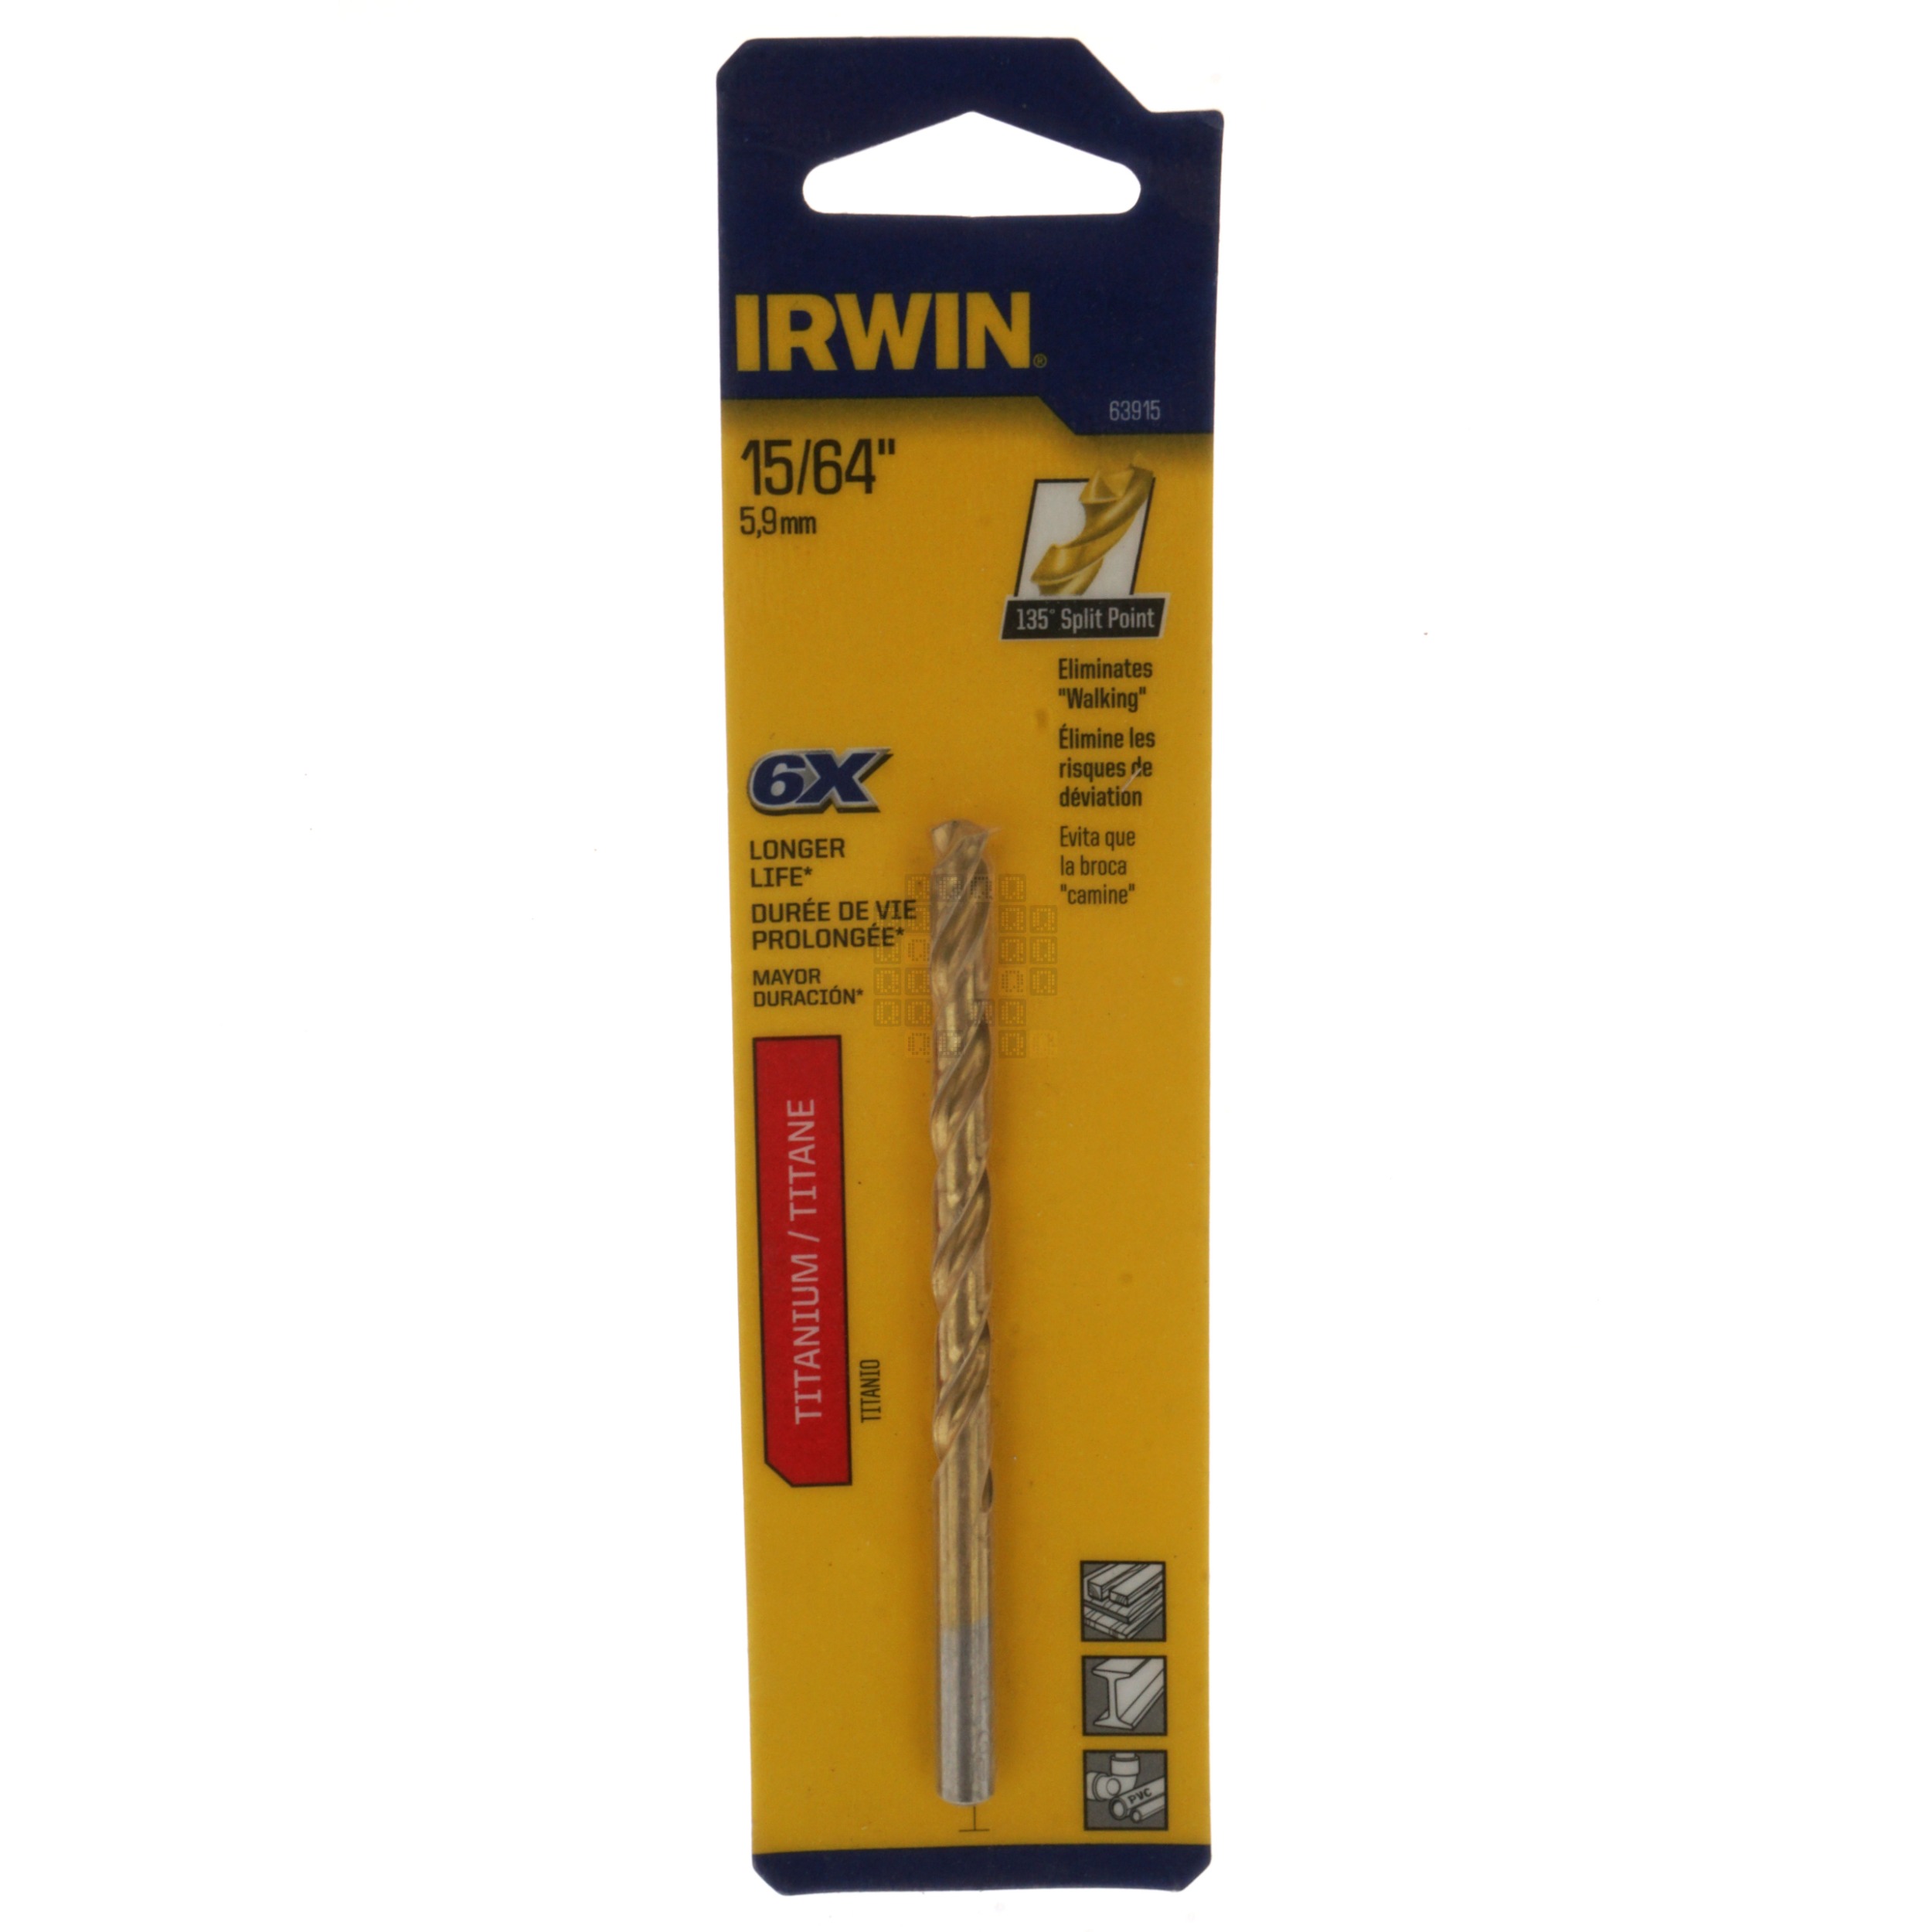 Irwin 63915 15/64" Titanium Coated 135° Split Point Drill Bit